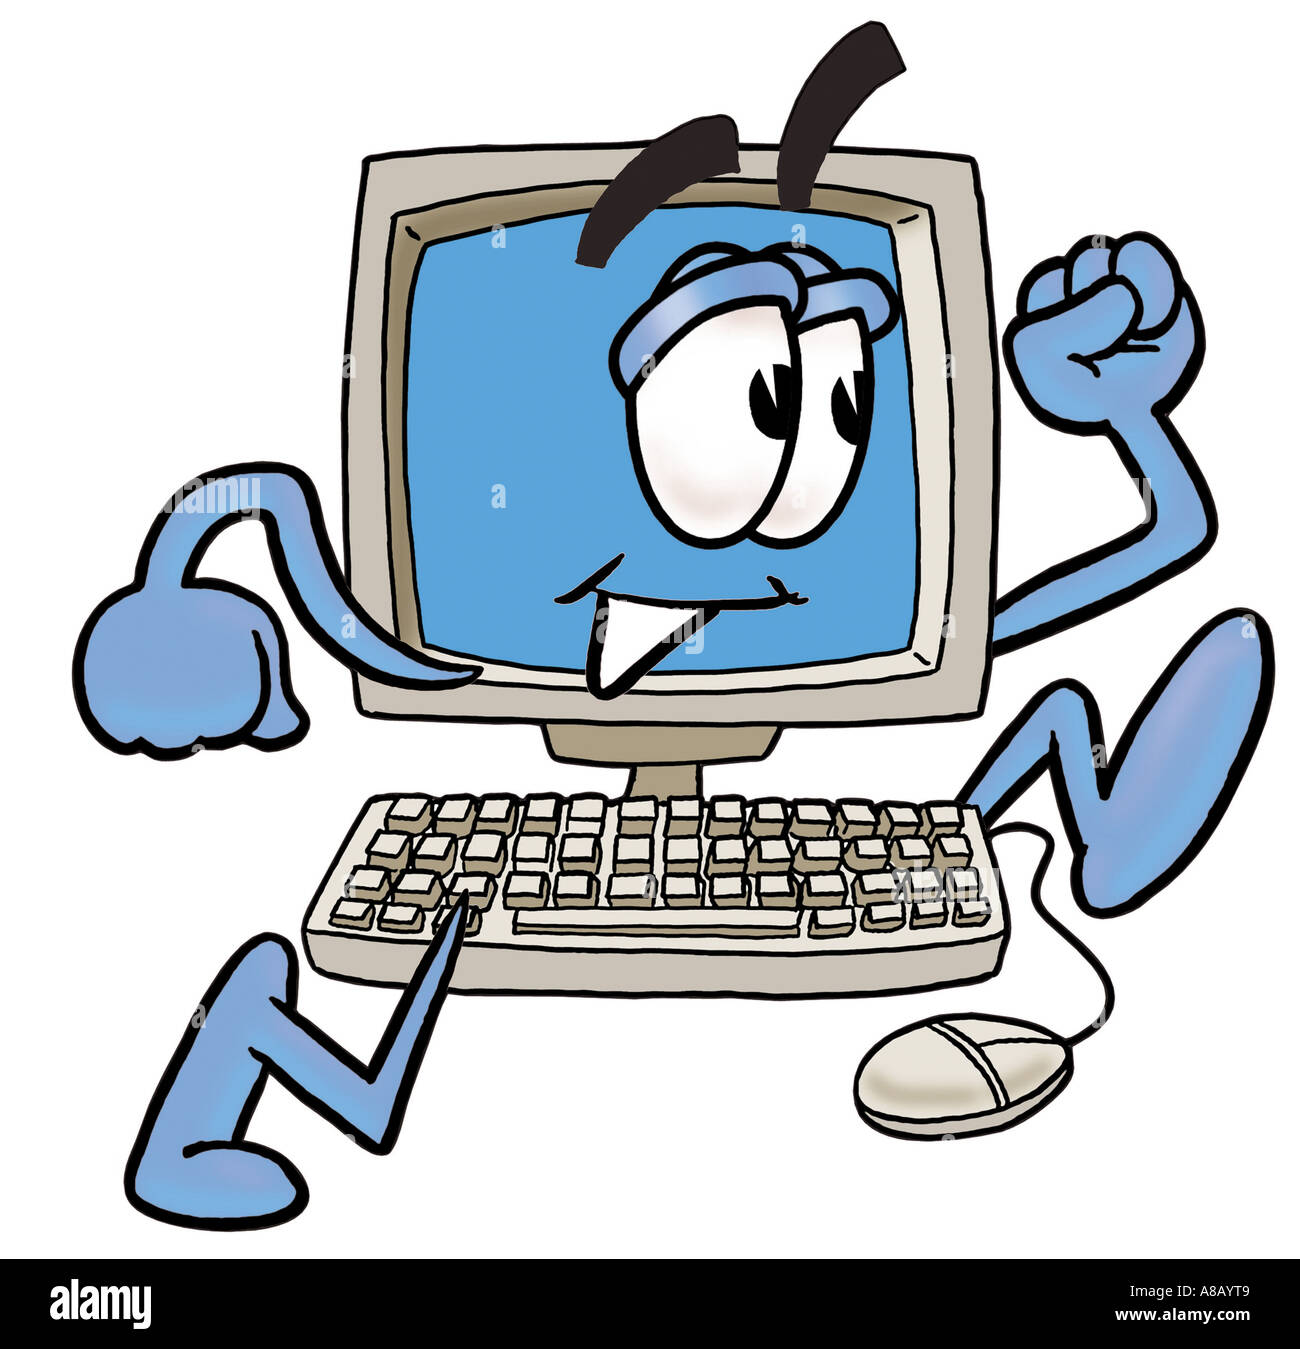 Running computer cartoon character Stock Photo